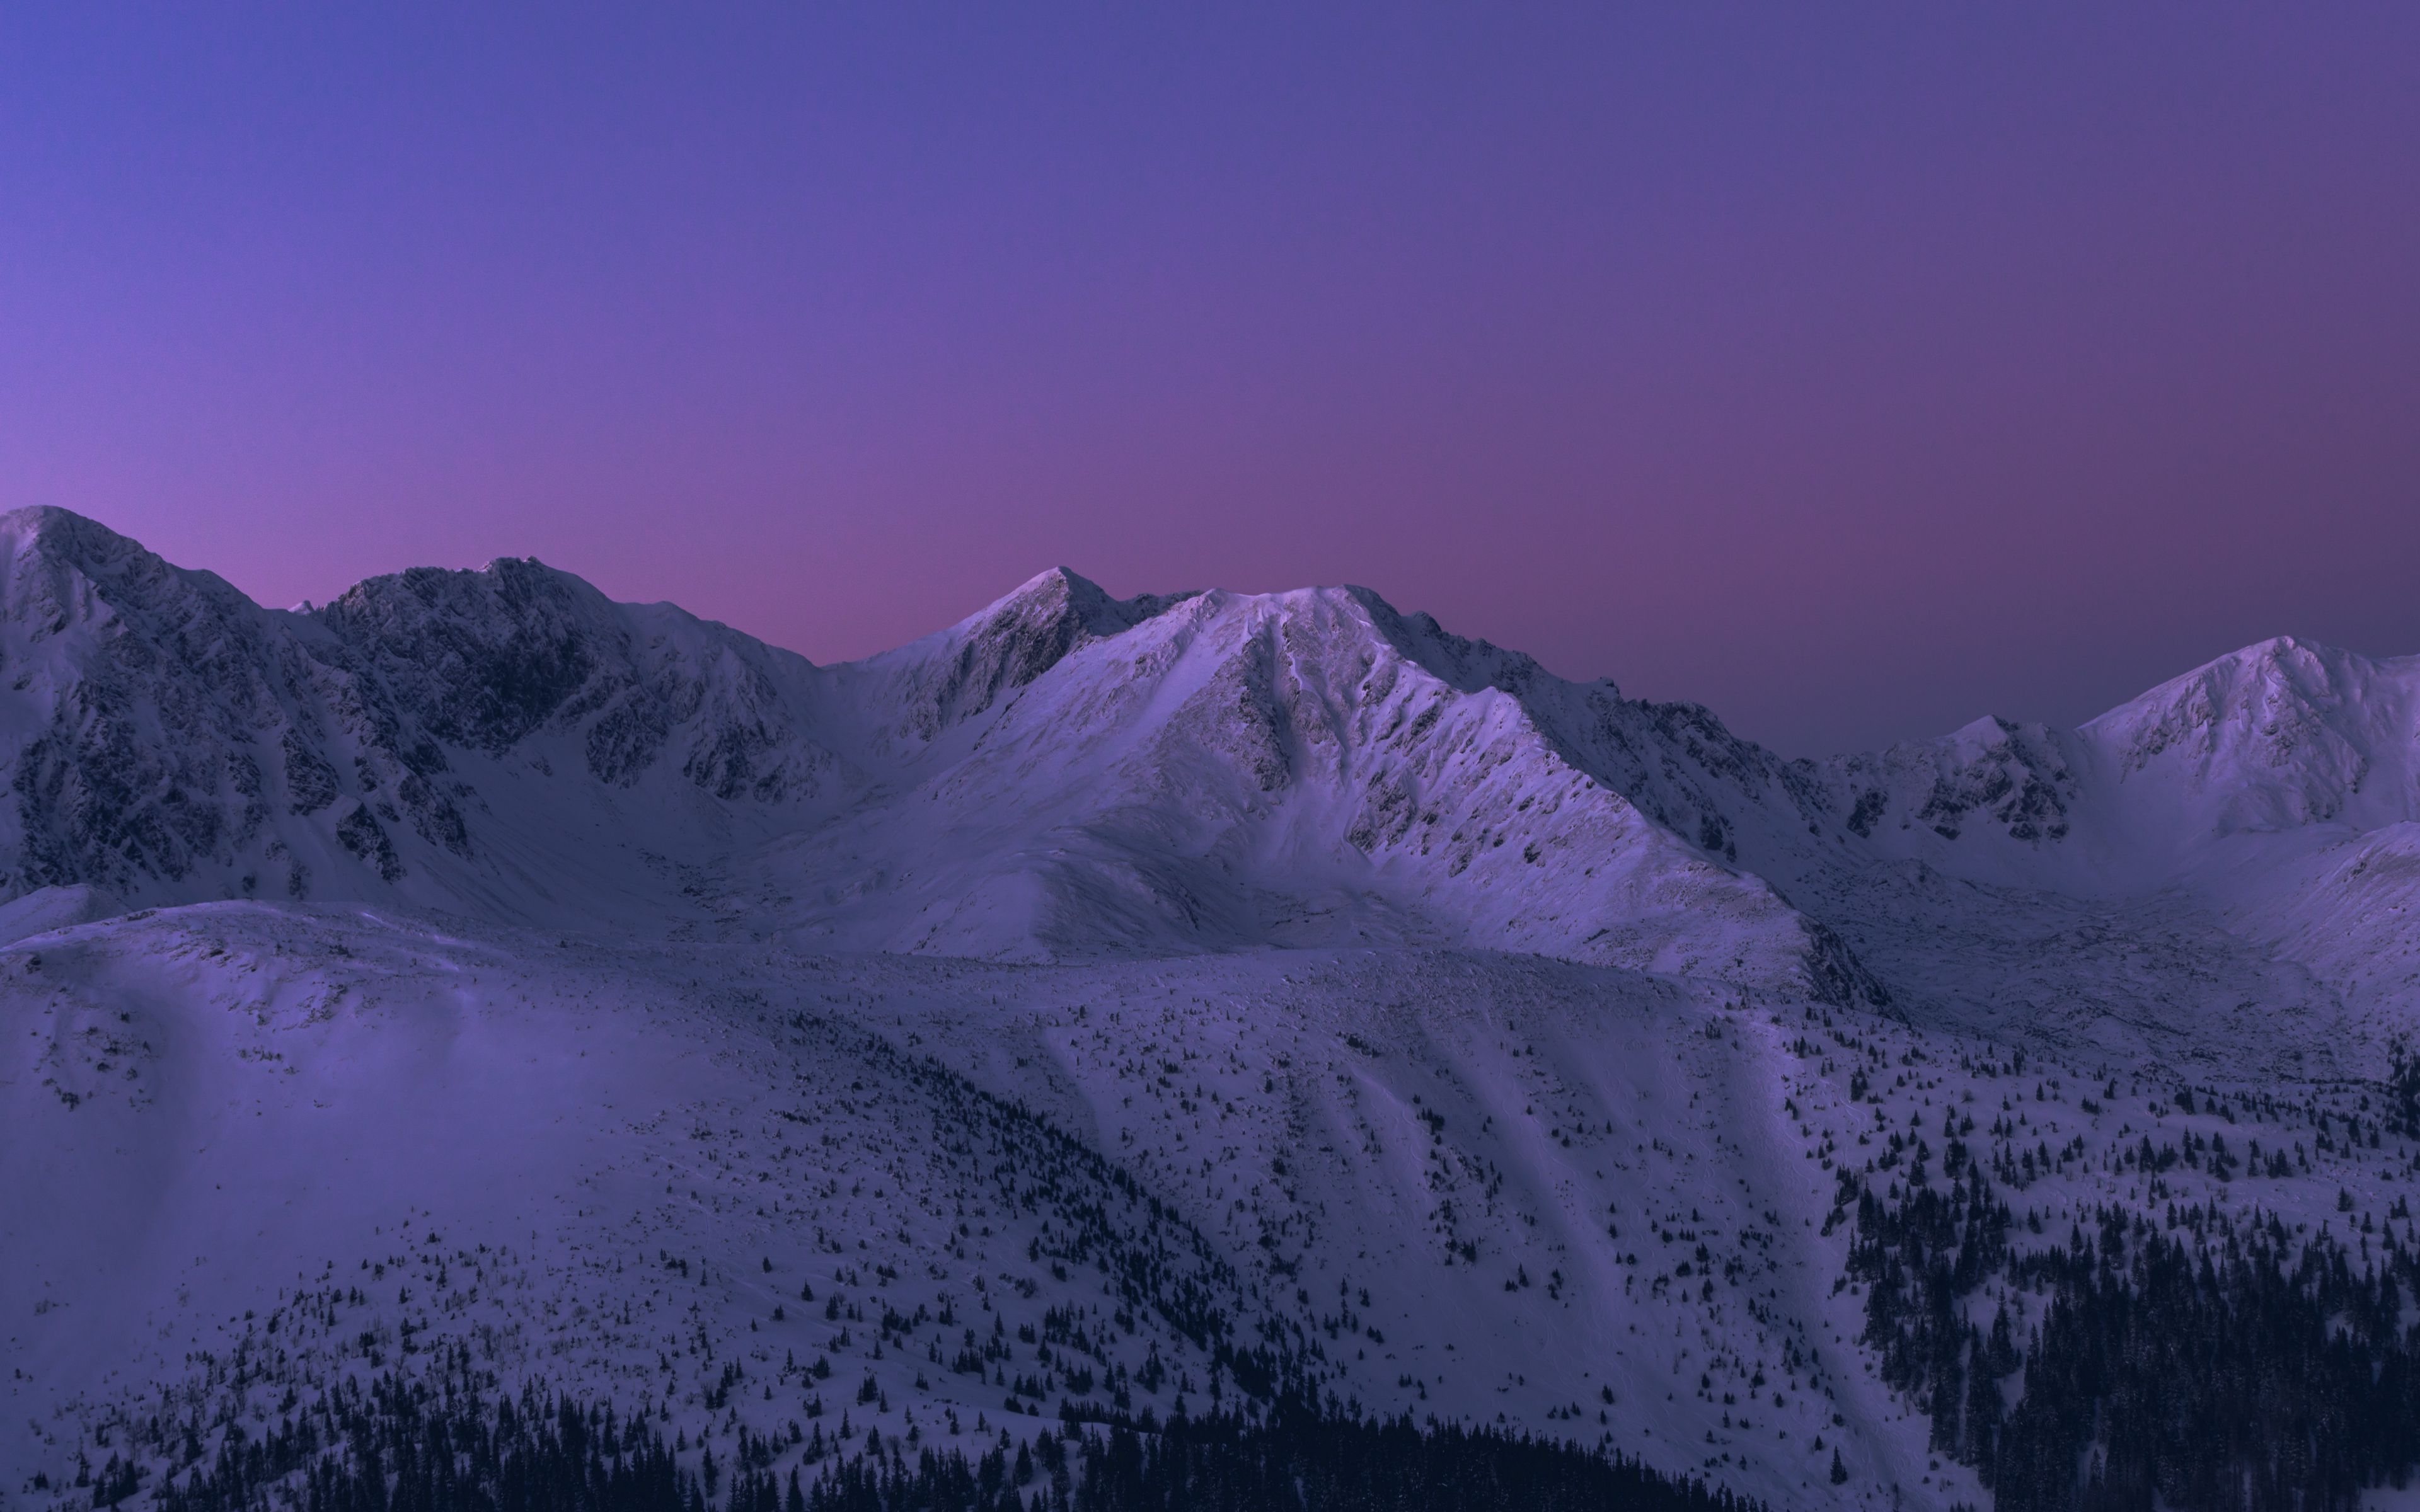 Download wallpaper 3840x2400 mountains, snow, night, landscape, dark 4k ultra HD 16:10 HD background